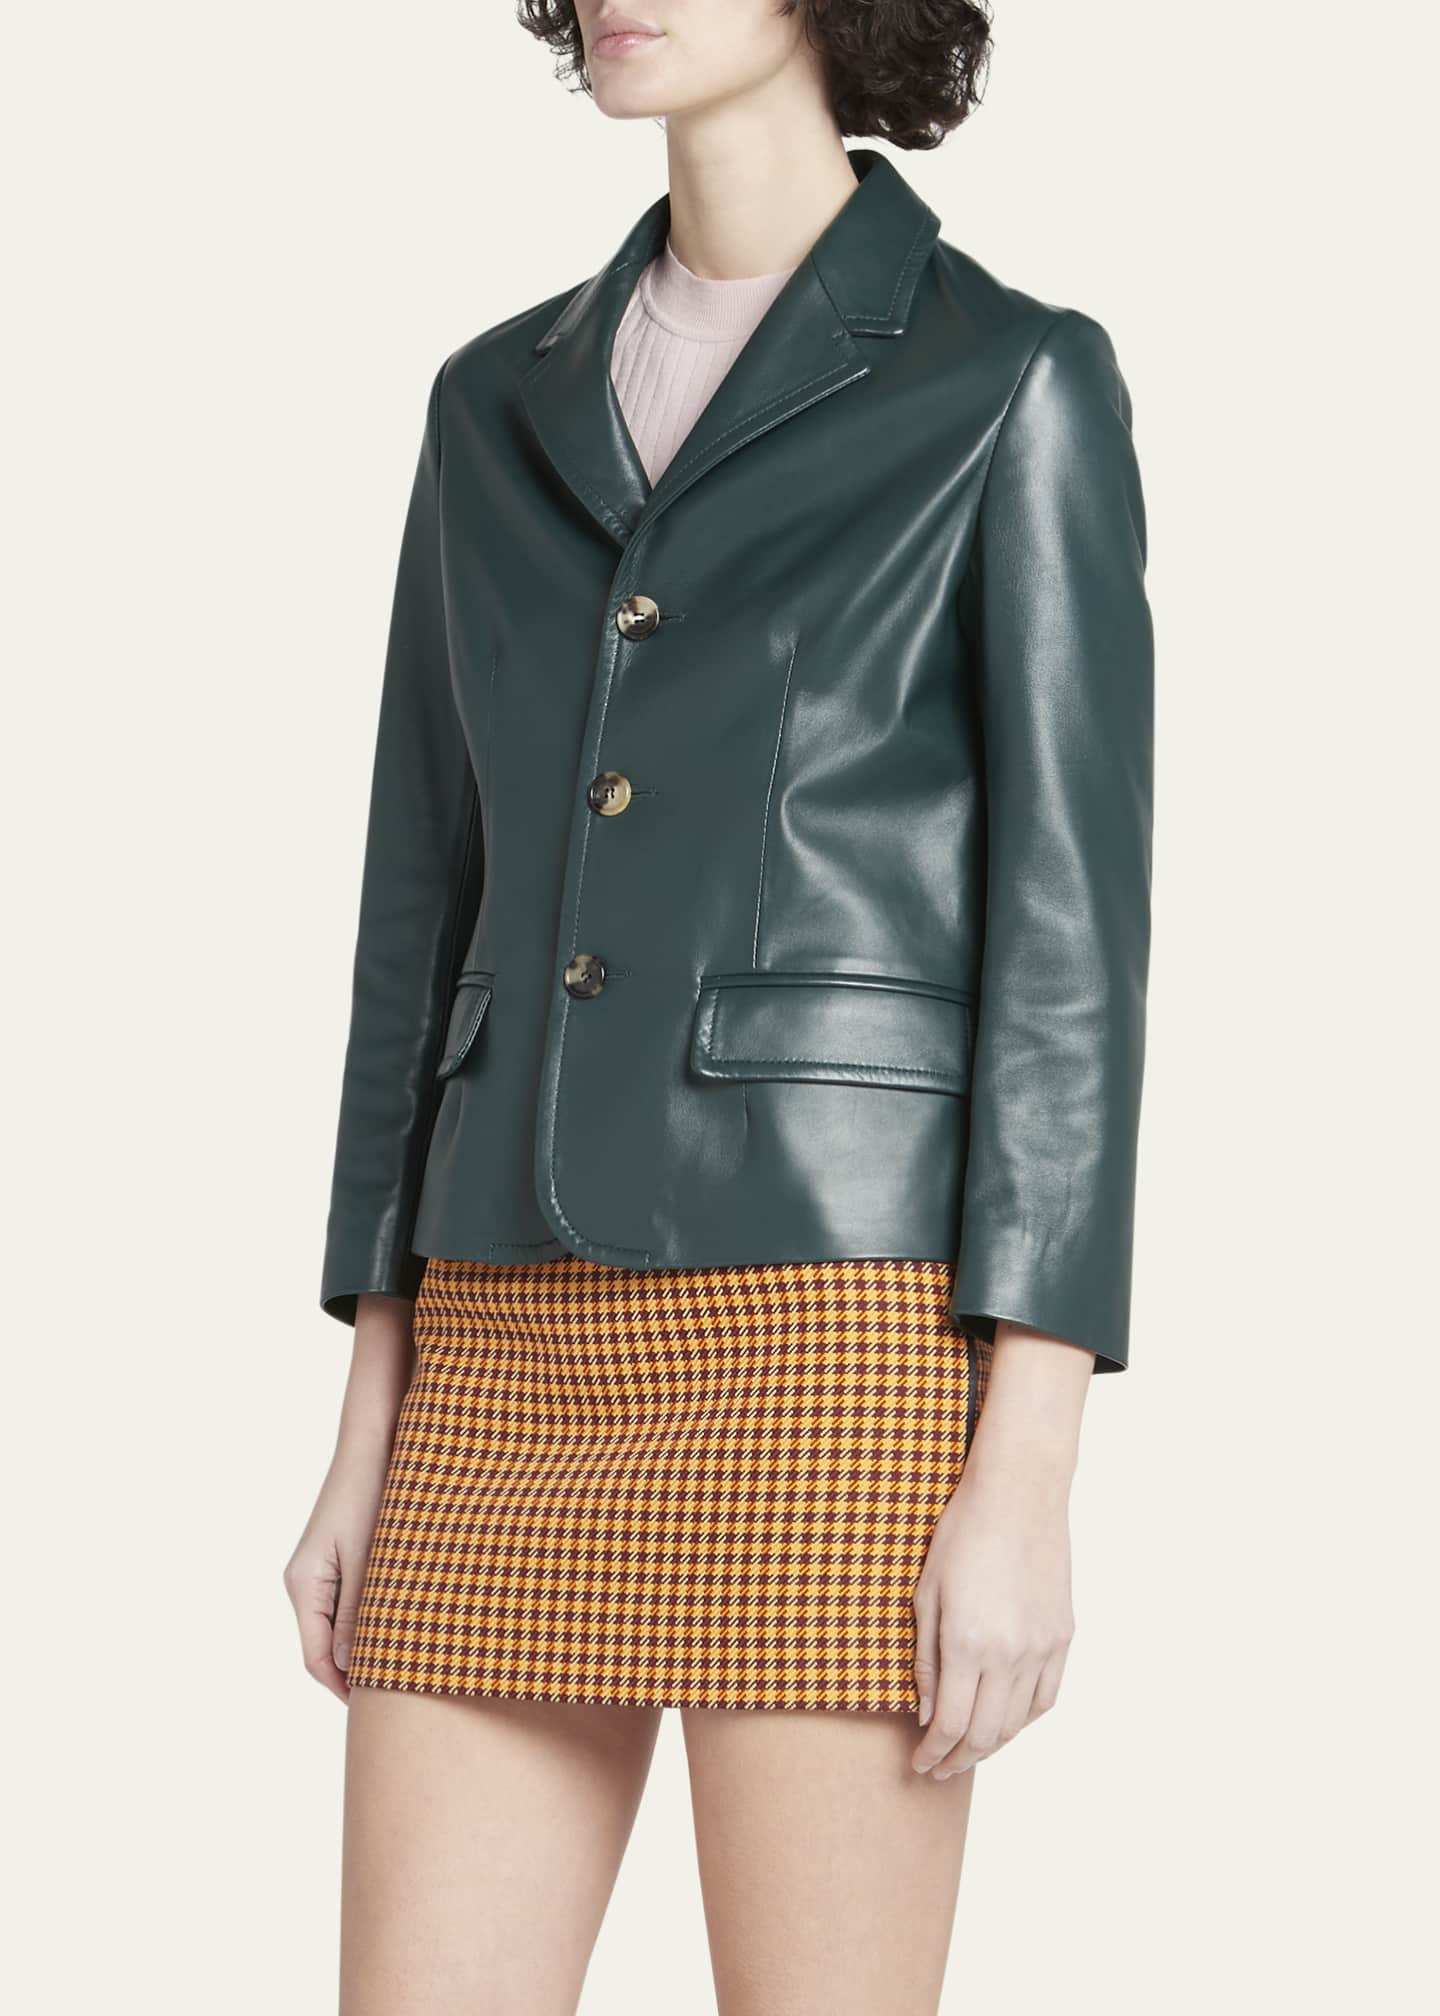 Marni Women's Leather Short Blazer Jacket